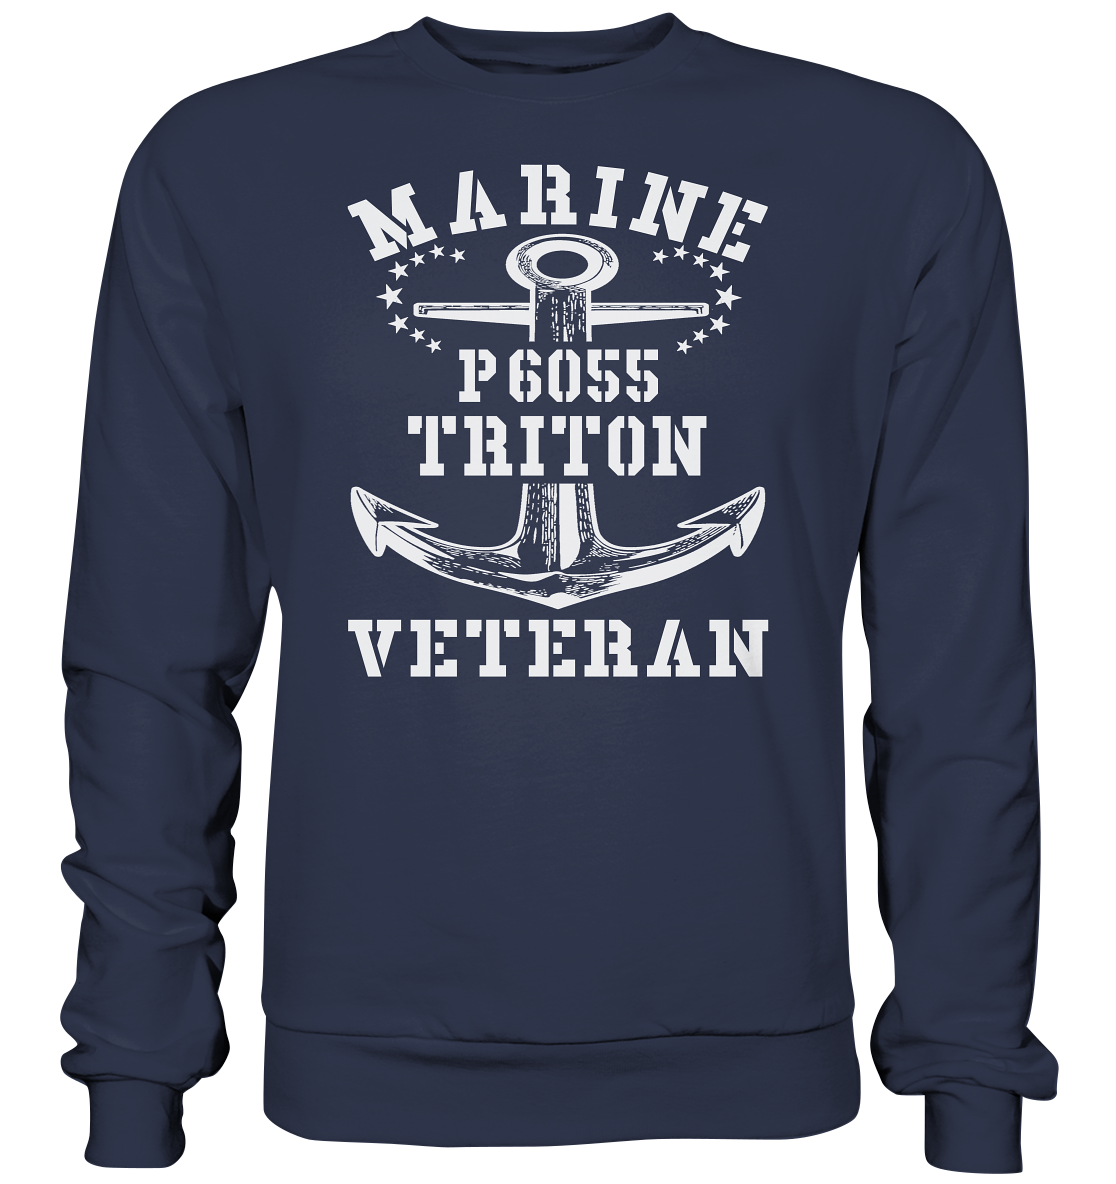 U-Jagdboot P6055 TRITON Marine Veteran - Premium Sweatshirt